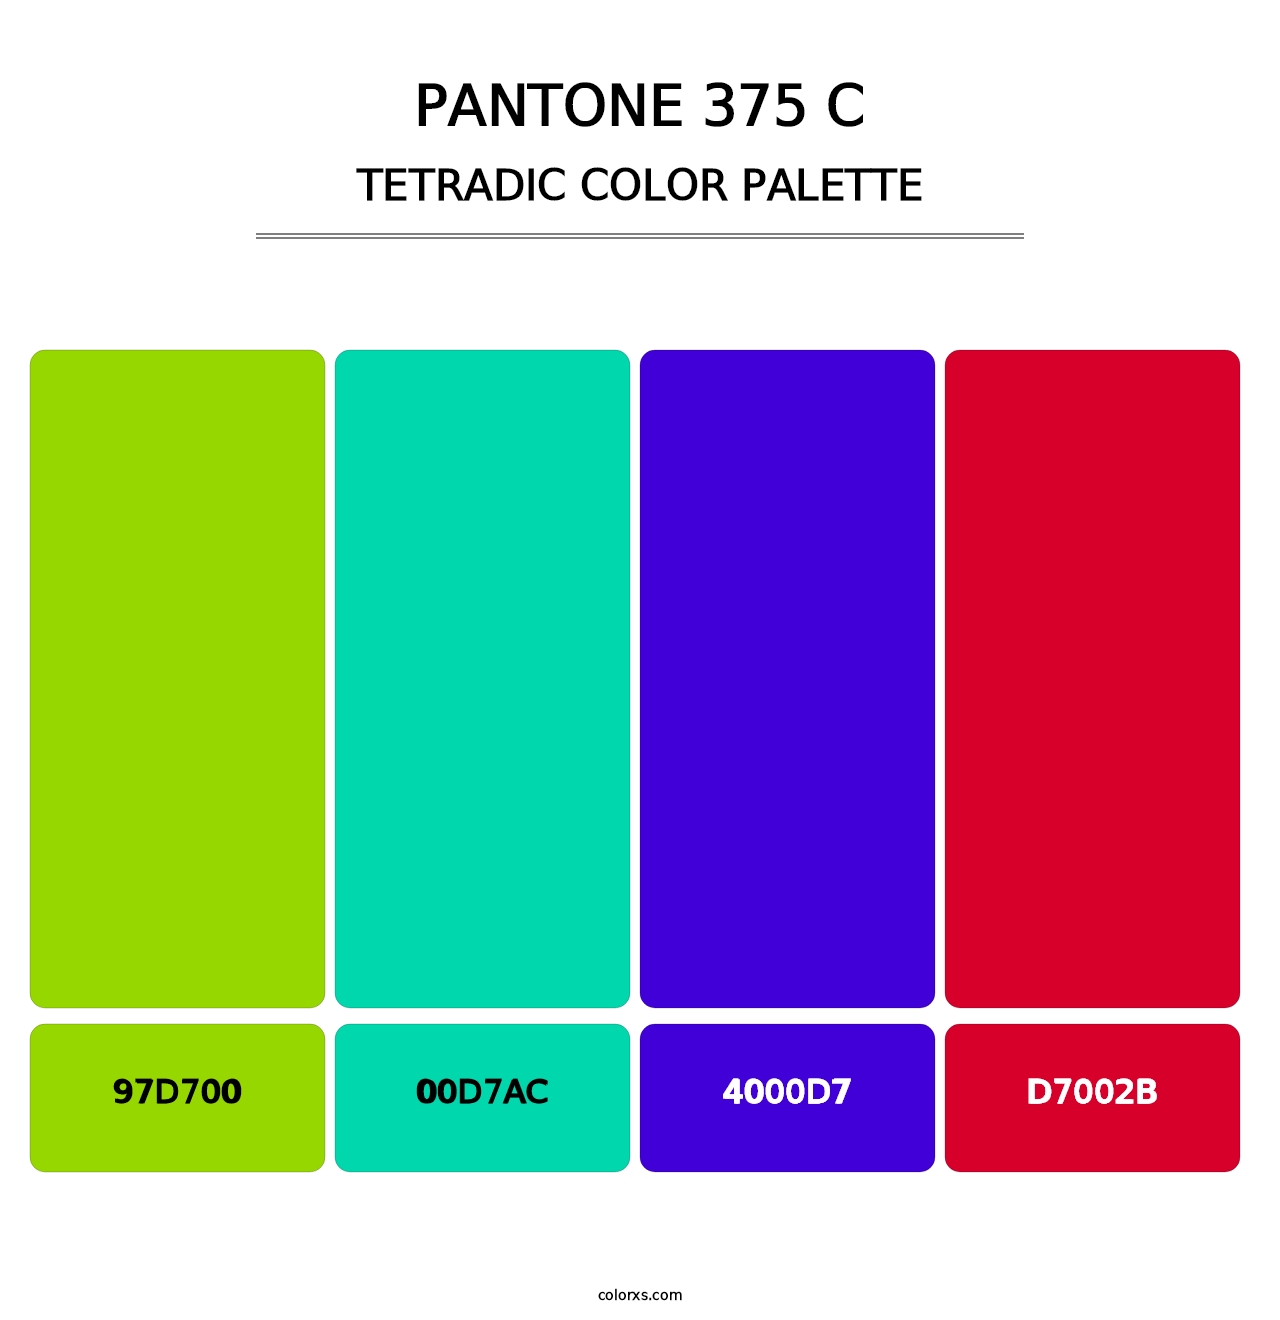 PANTONE 375 C - Tetradic Color Palette